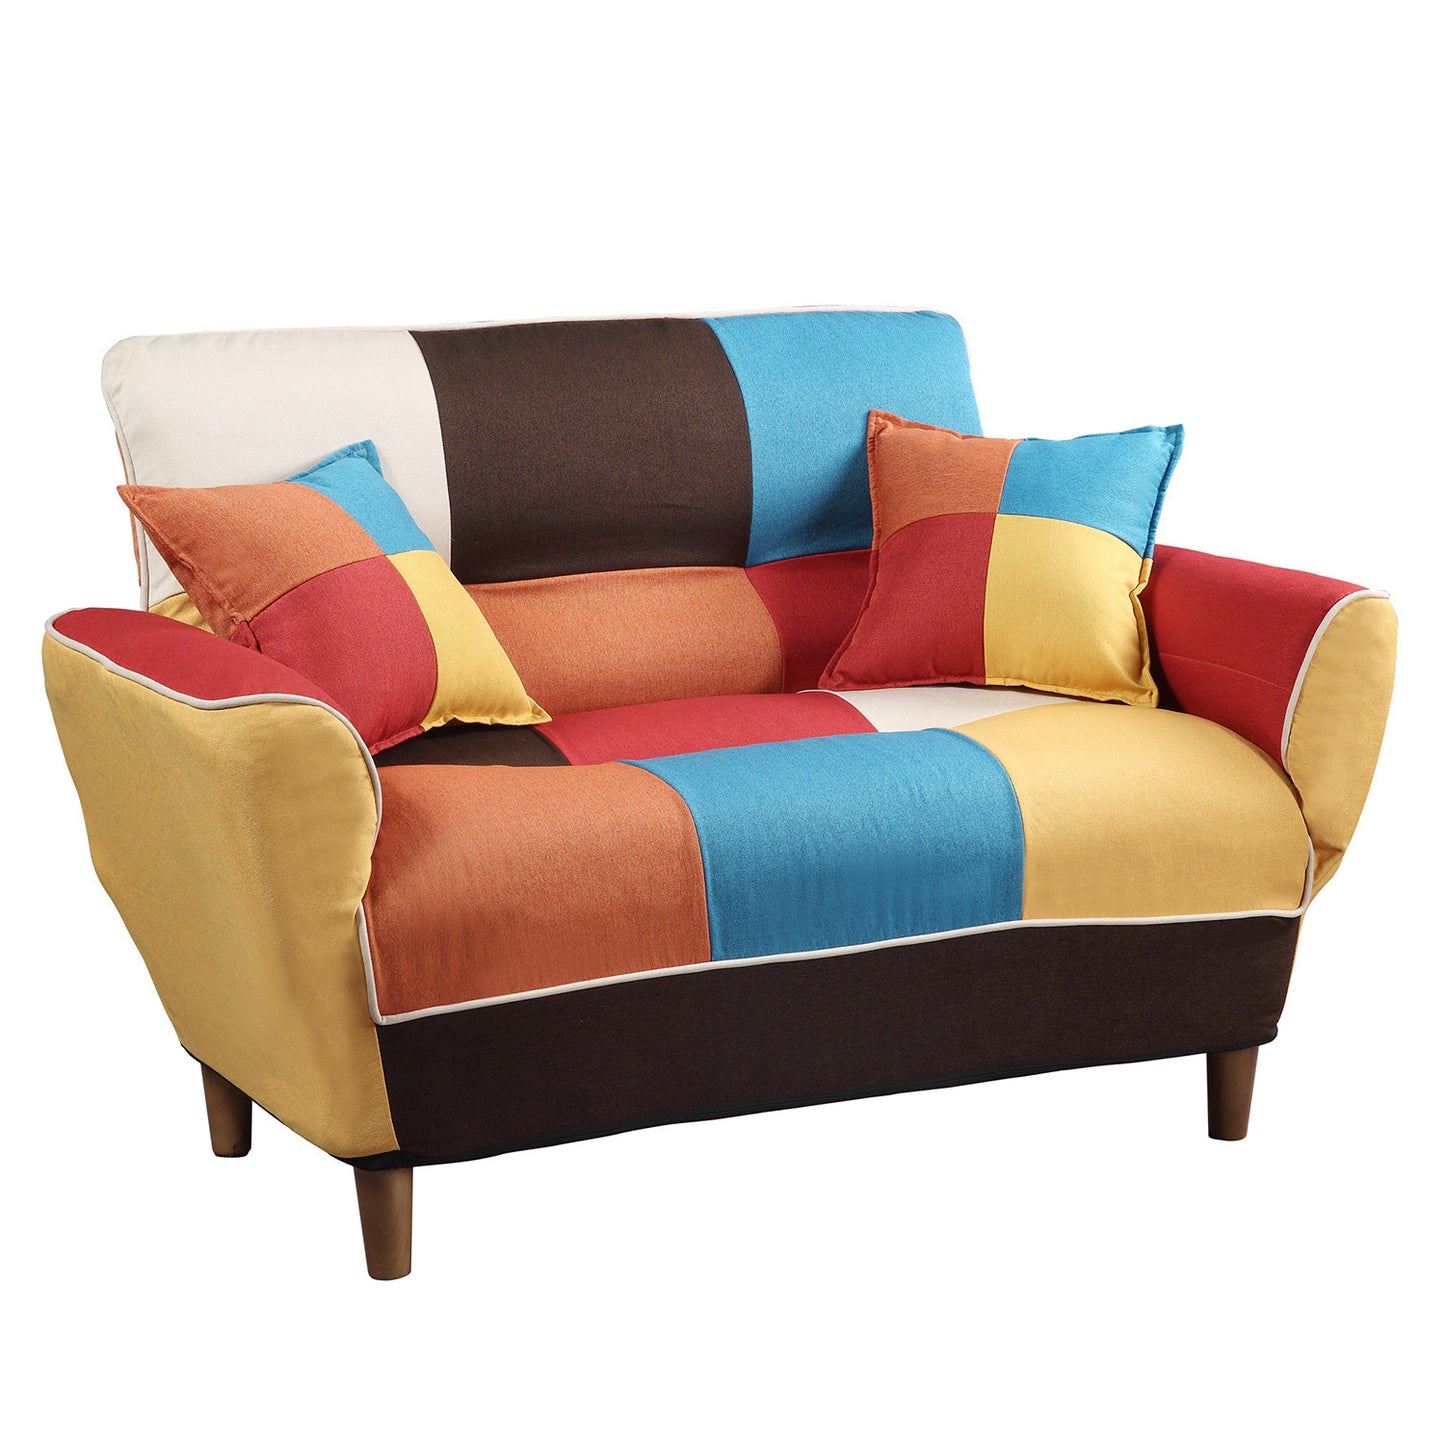 46" Brown Linen Futon Convertible Sleeper Love Seat And Toss Pillows By Homeroots